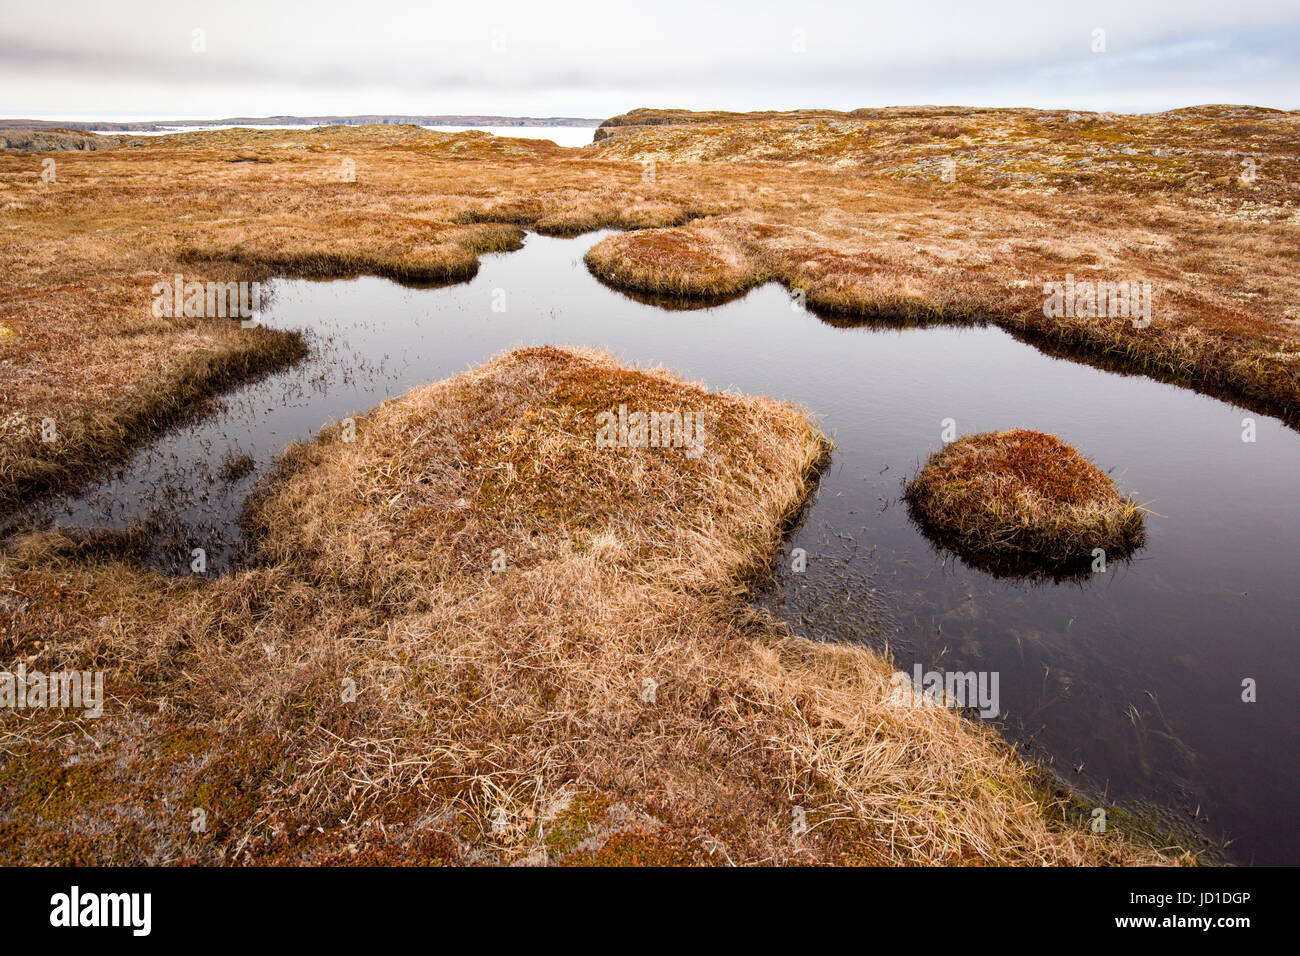 Barren grassy landscape at Spillars Cove, near Bonavista, Cape Bonavista Peninsula, Newfoundland, Canada Stock Photo